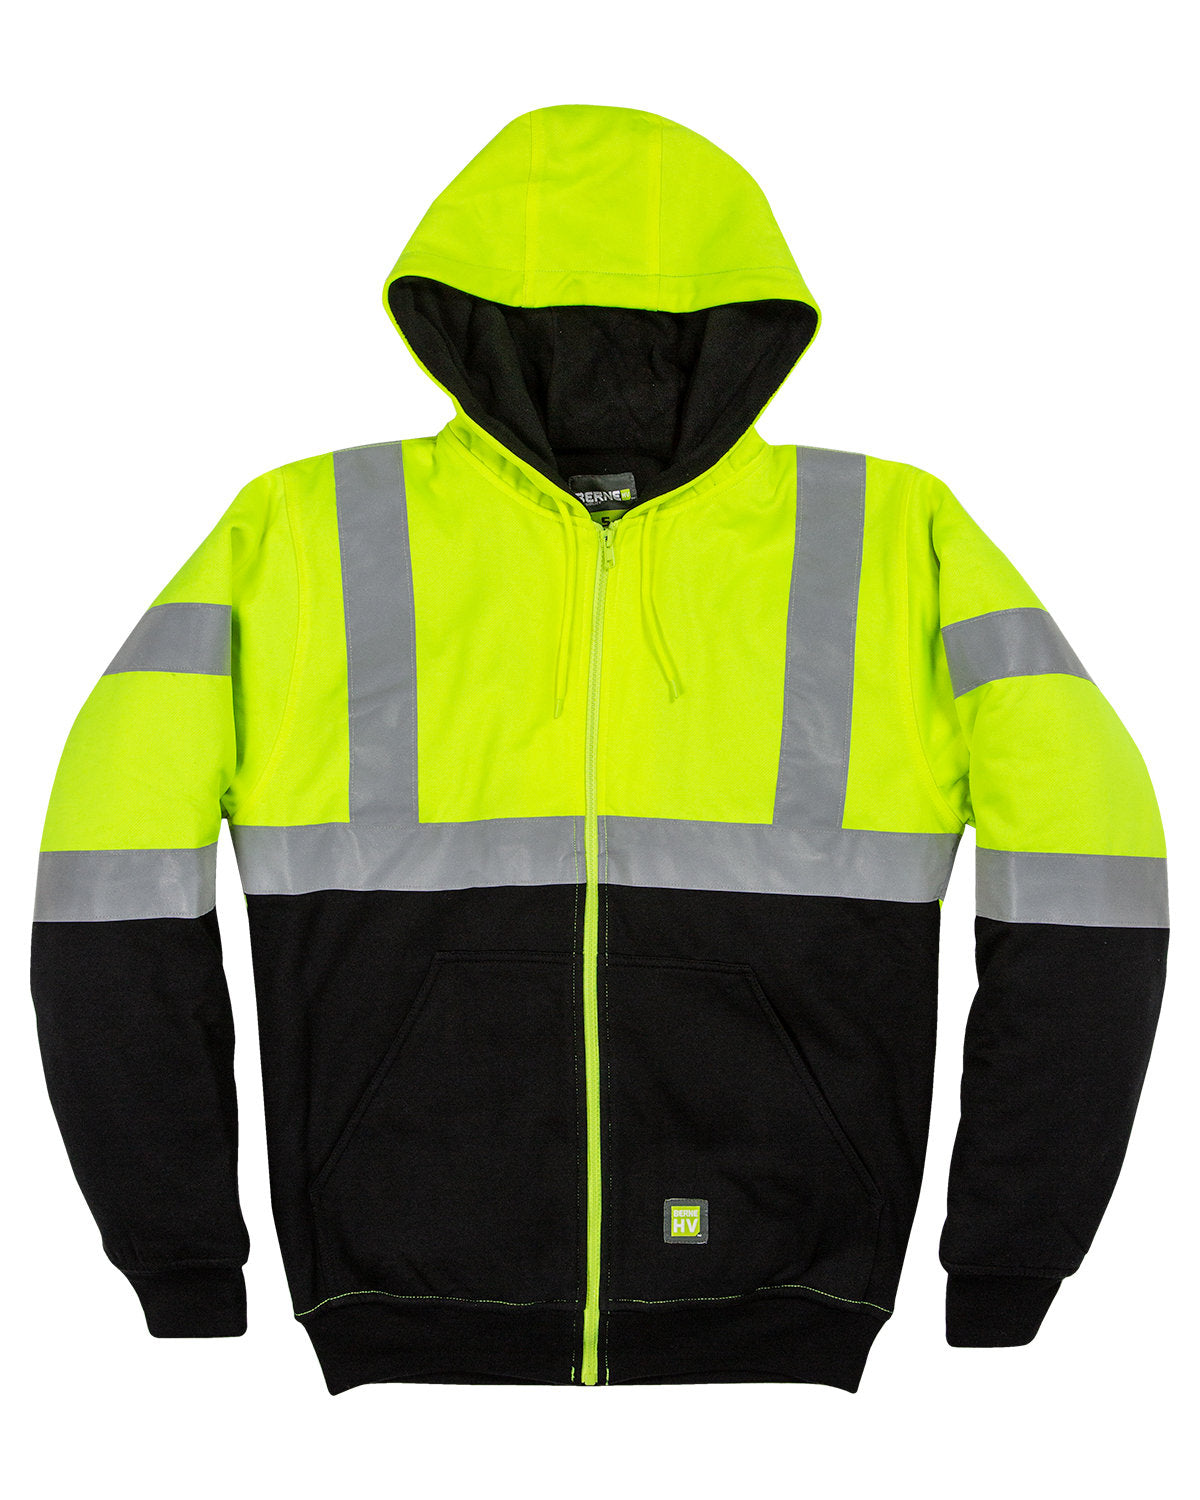 BERNE Men's Hi-Vis Class 3 Color Block Full-Zip Hooded Sweatshirt: Vibrant Visibility and Comfort